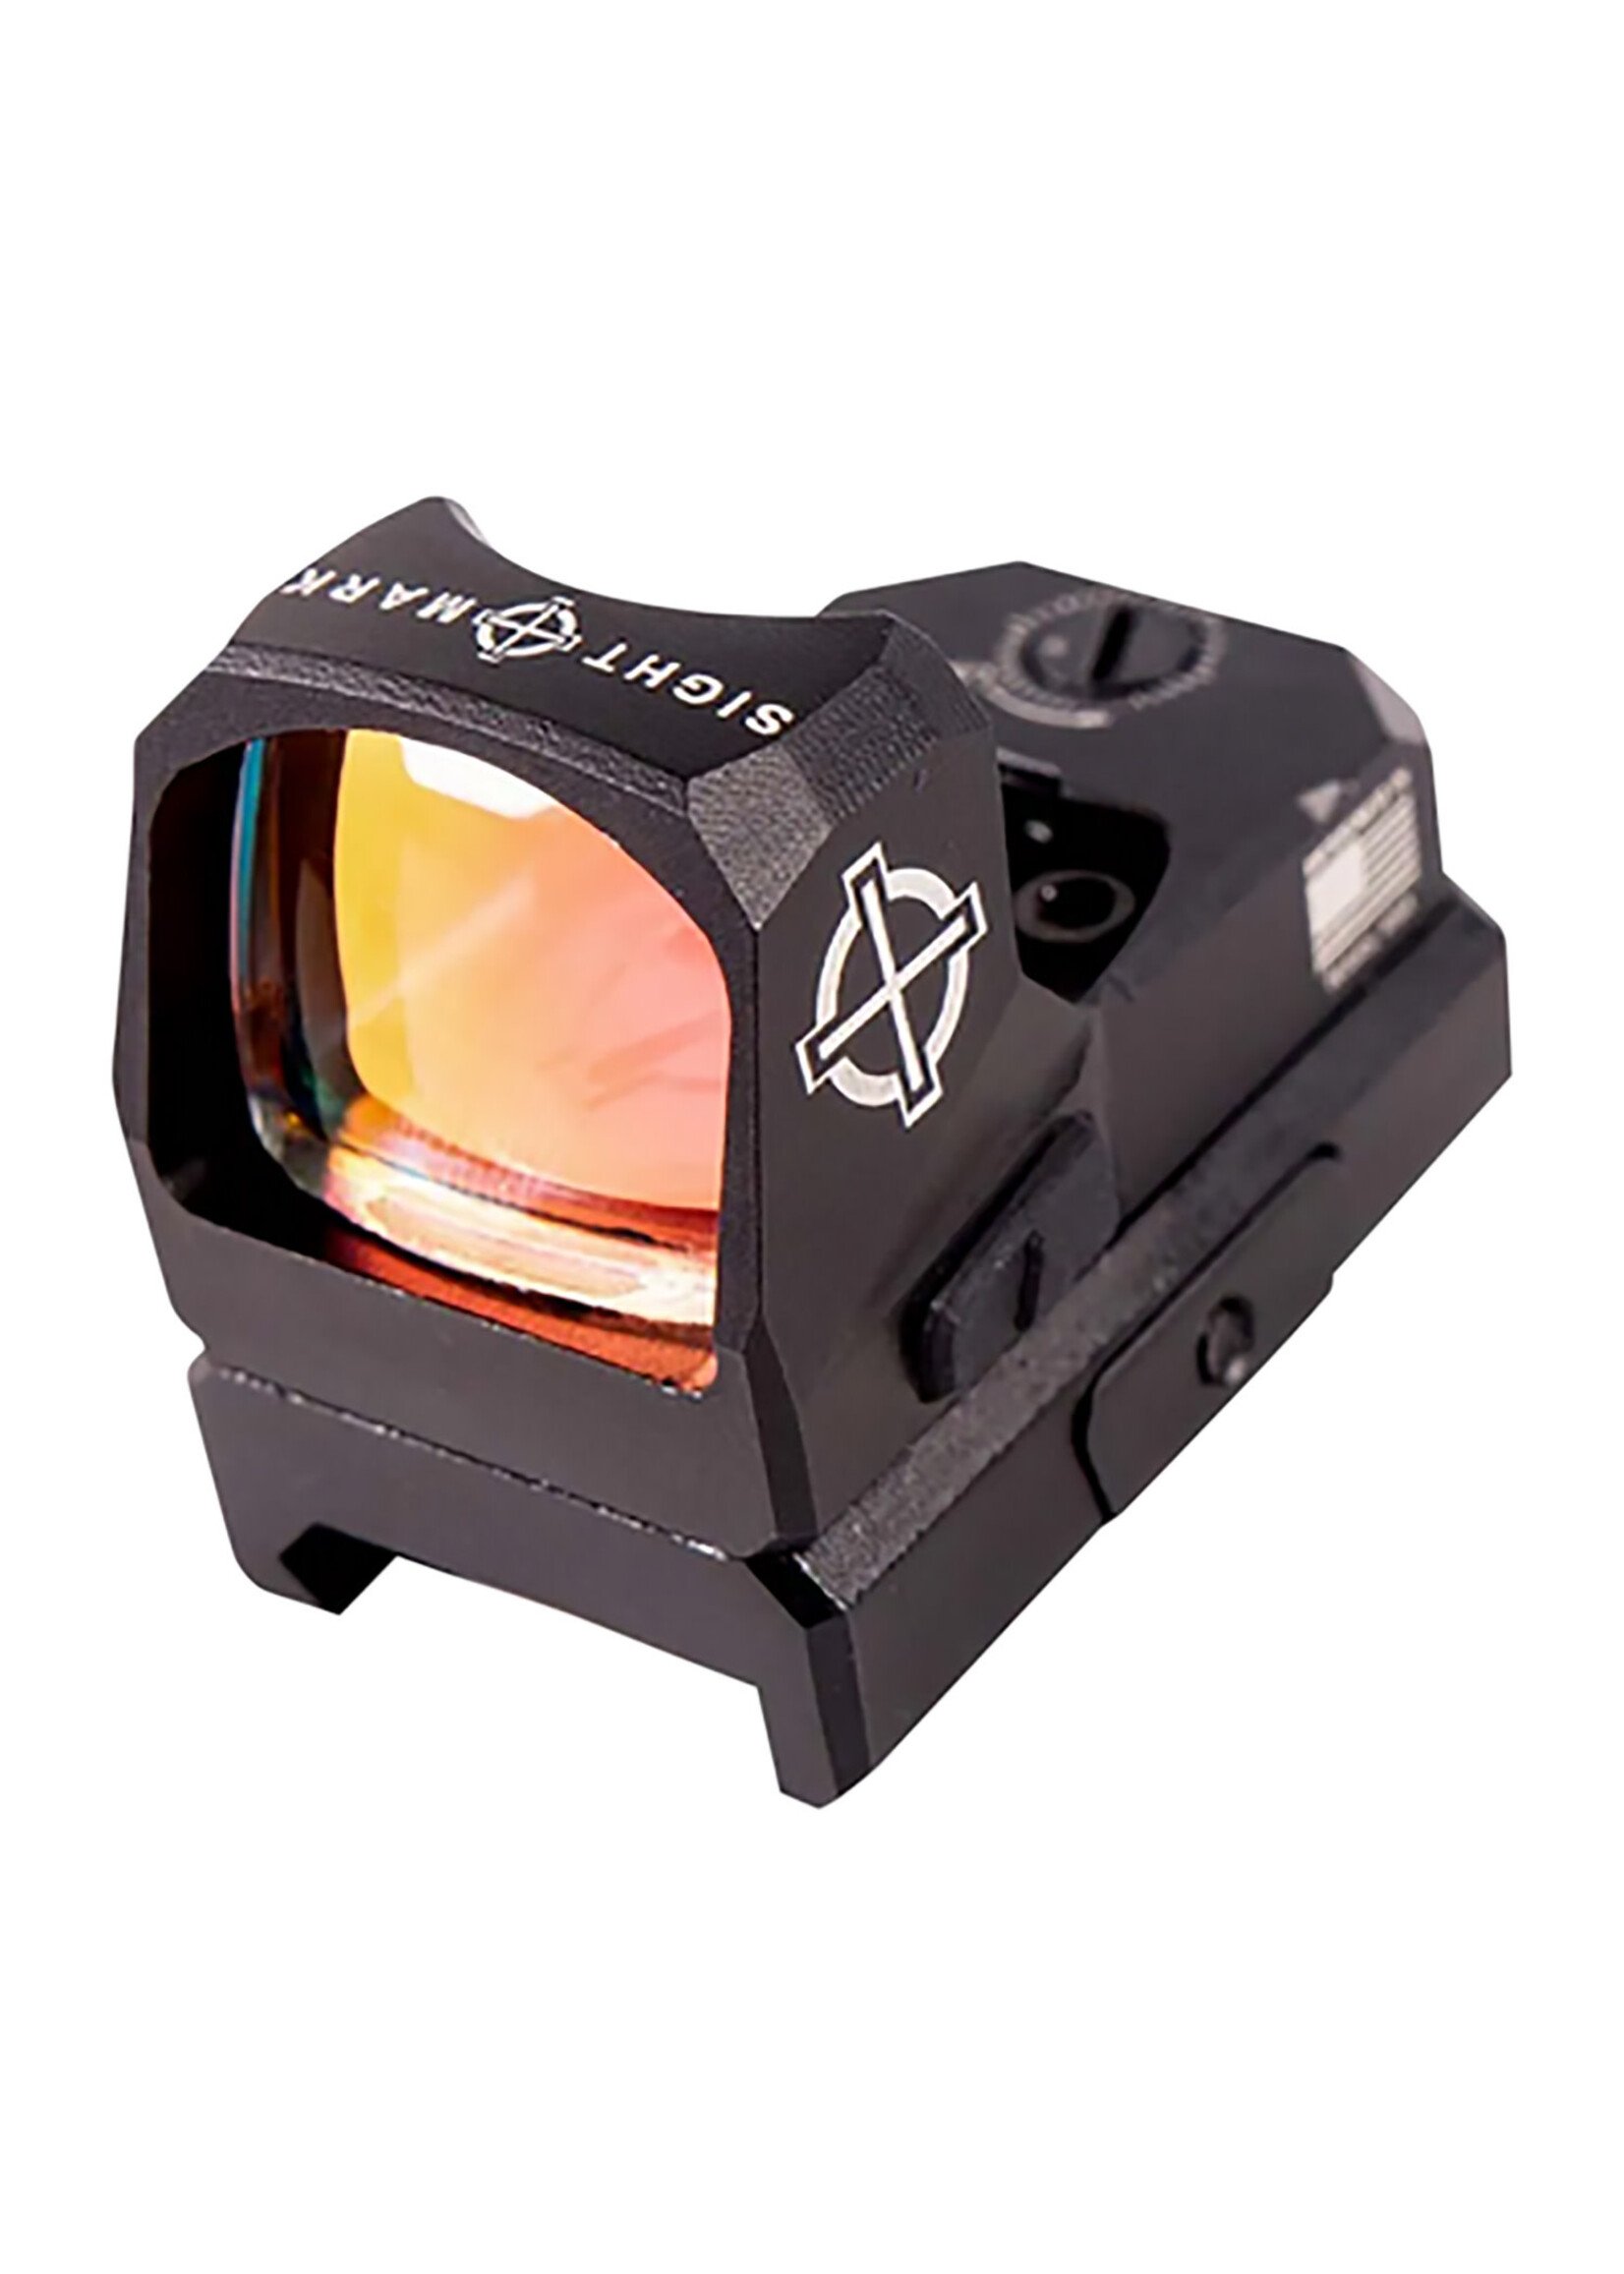 Sightmark Sightmark Mini Shot A-Spec Matte Black 1x22x17mm 2 MOA Illuminated Red Dot Reticle